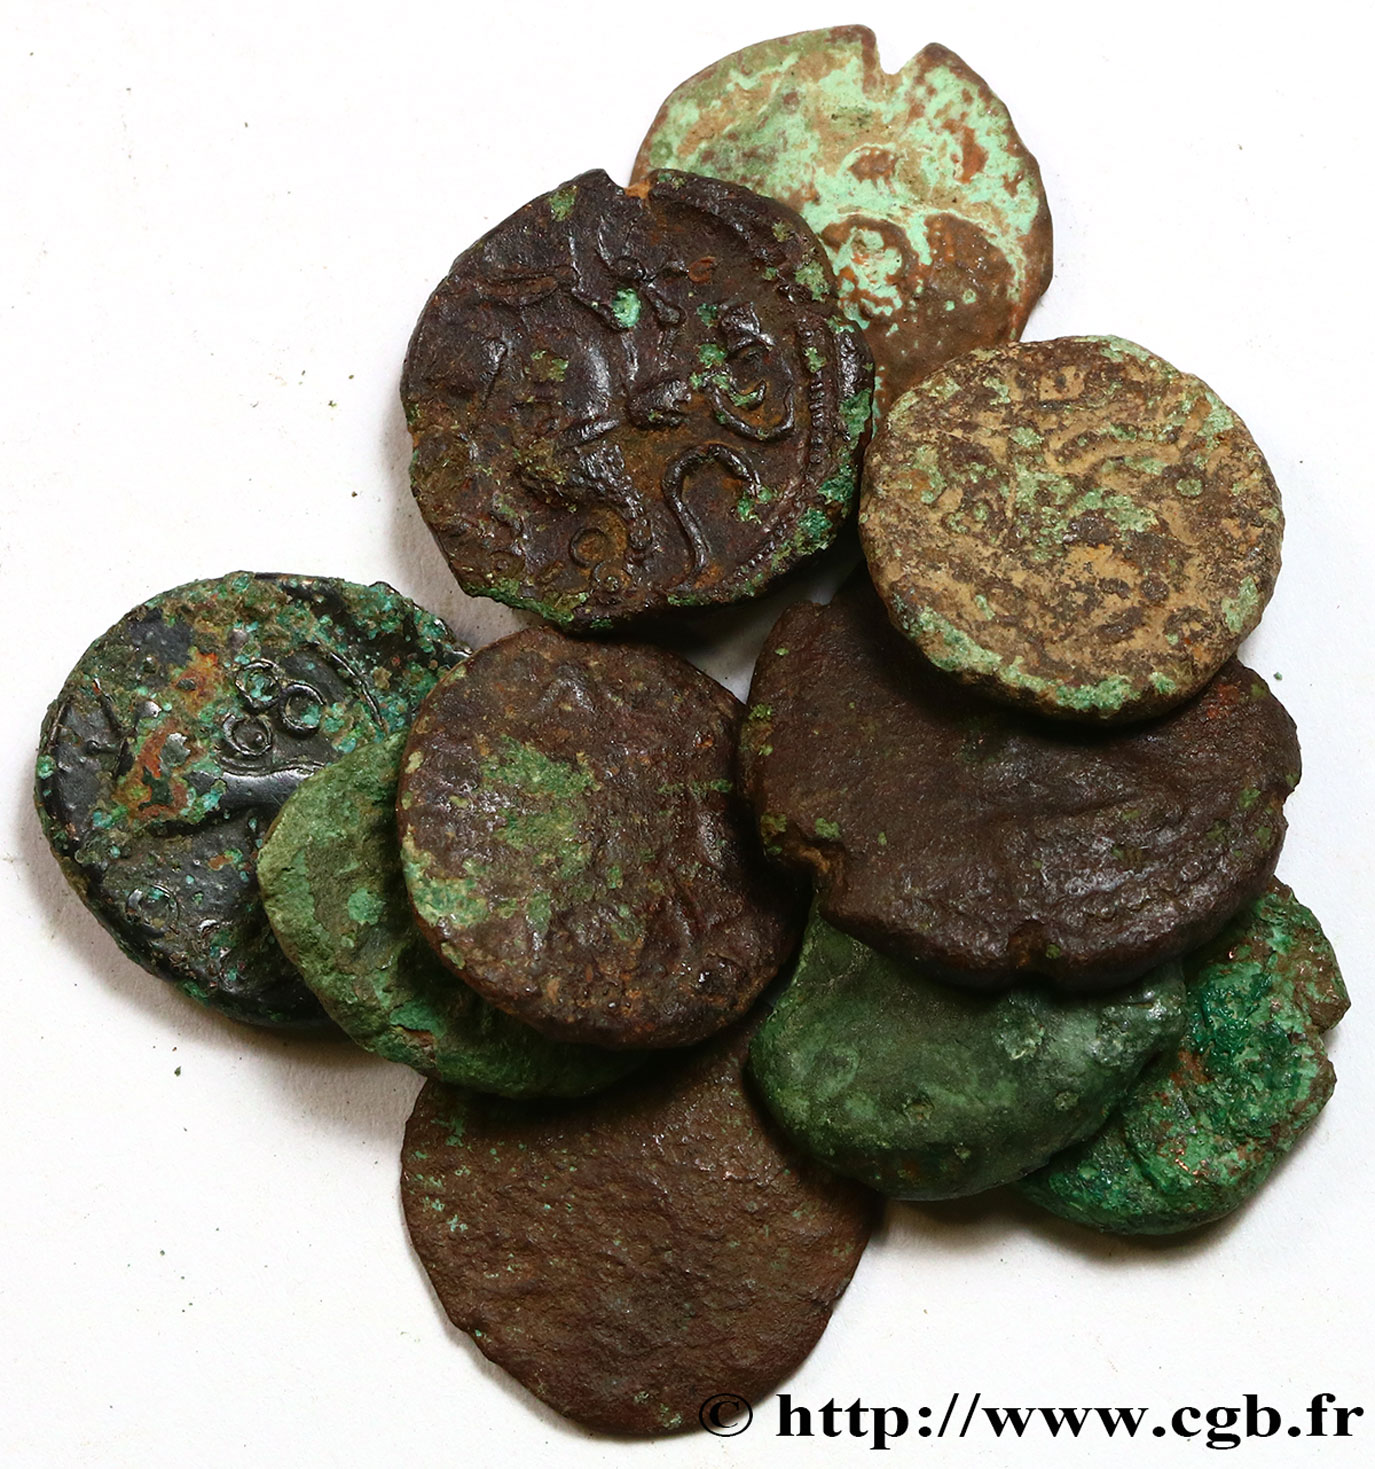 GALLO-BELGIAN - CELTICA Lot de 10 bronzes variés lotto